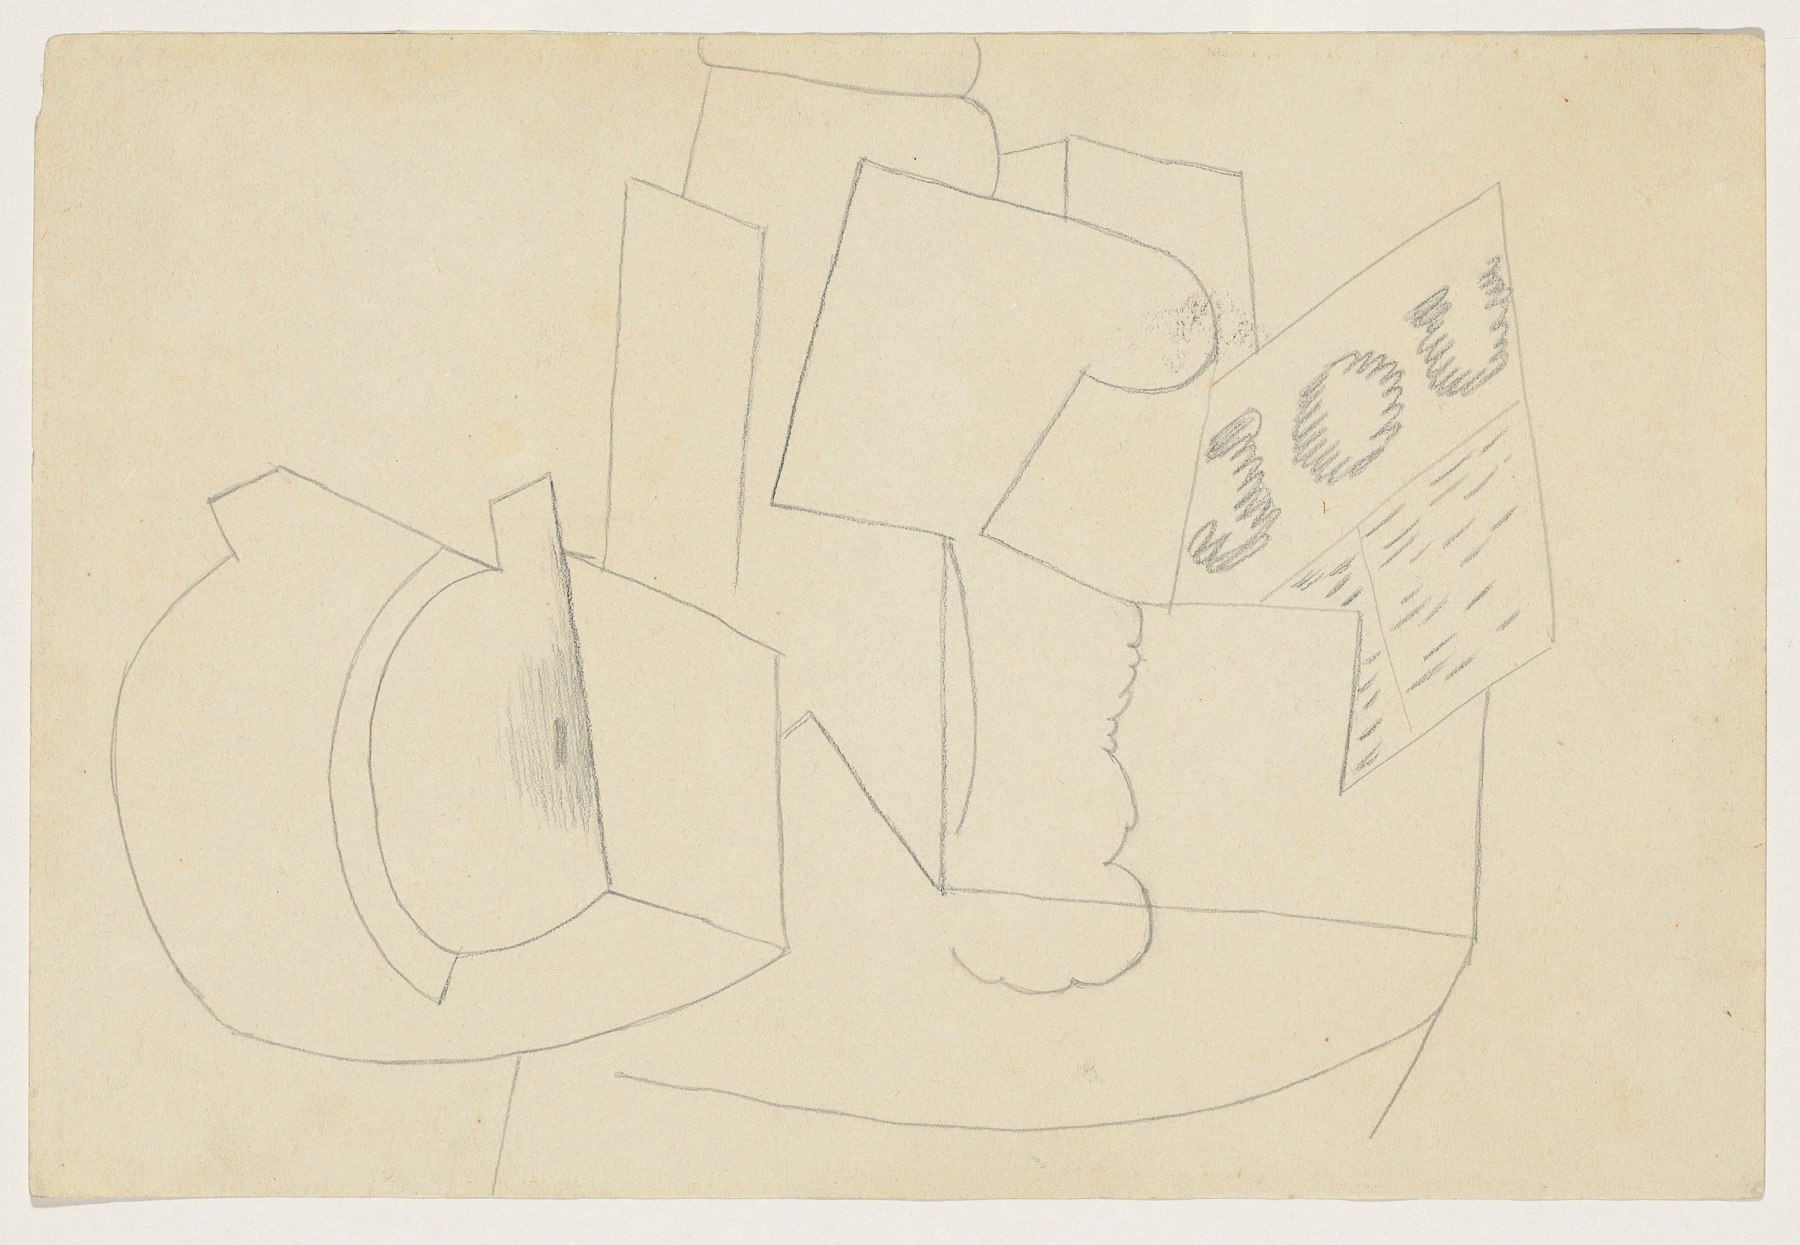 Pablo Picasso, Composition au Journal, 1914-15 Pencil on paper 19.7 x 29.4 cm. (7.4 x 11.4 in.)